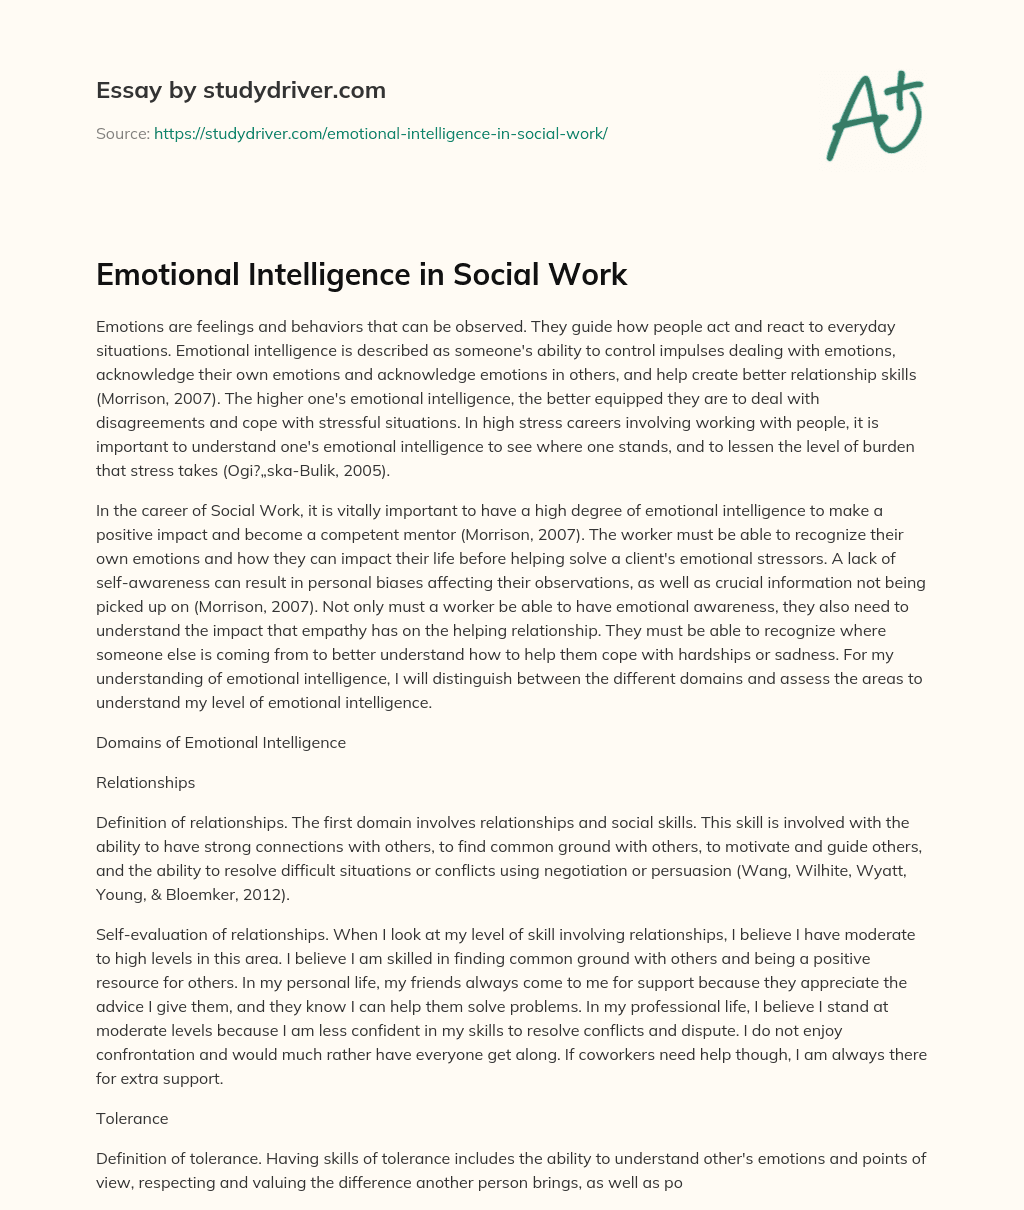 Emotional Intelligence in Social Work essay